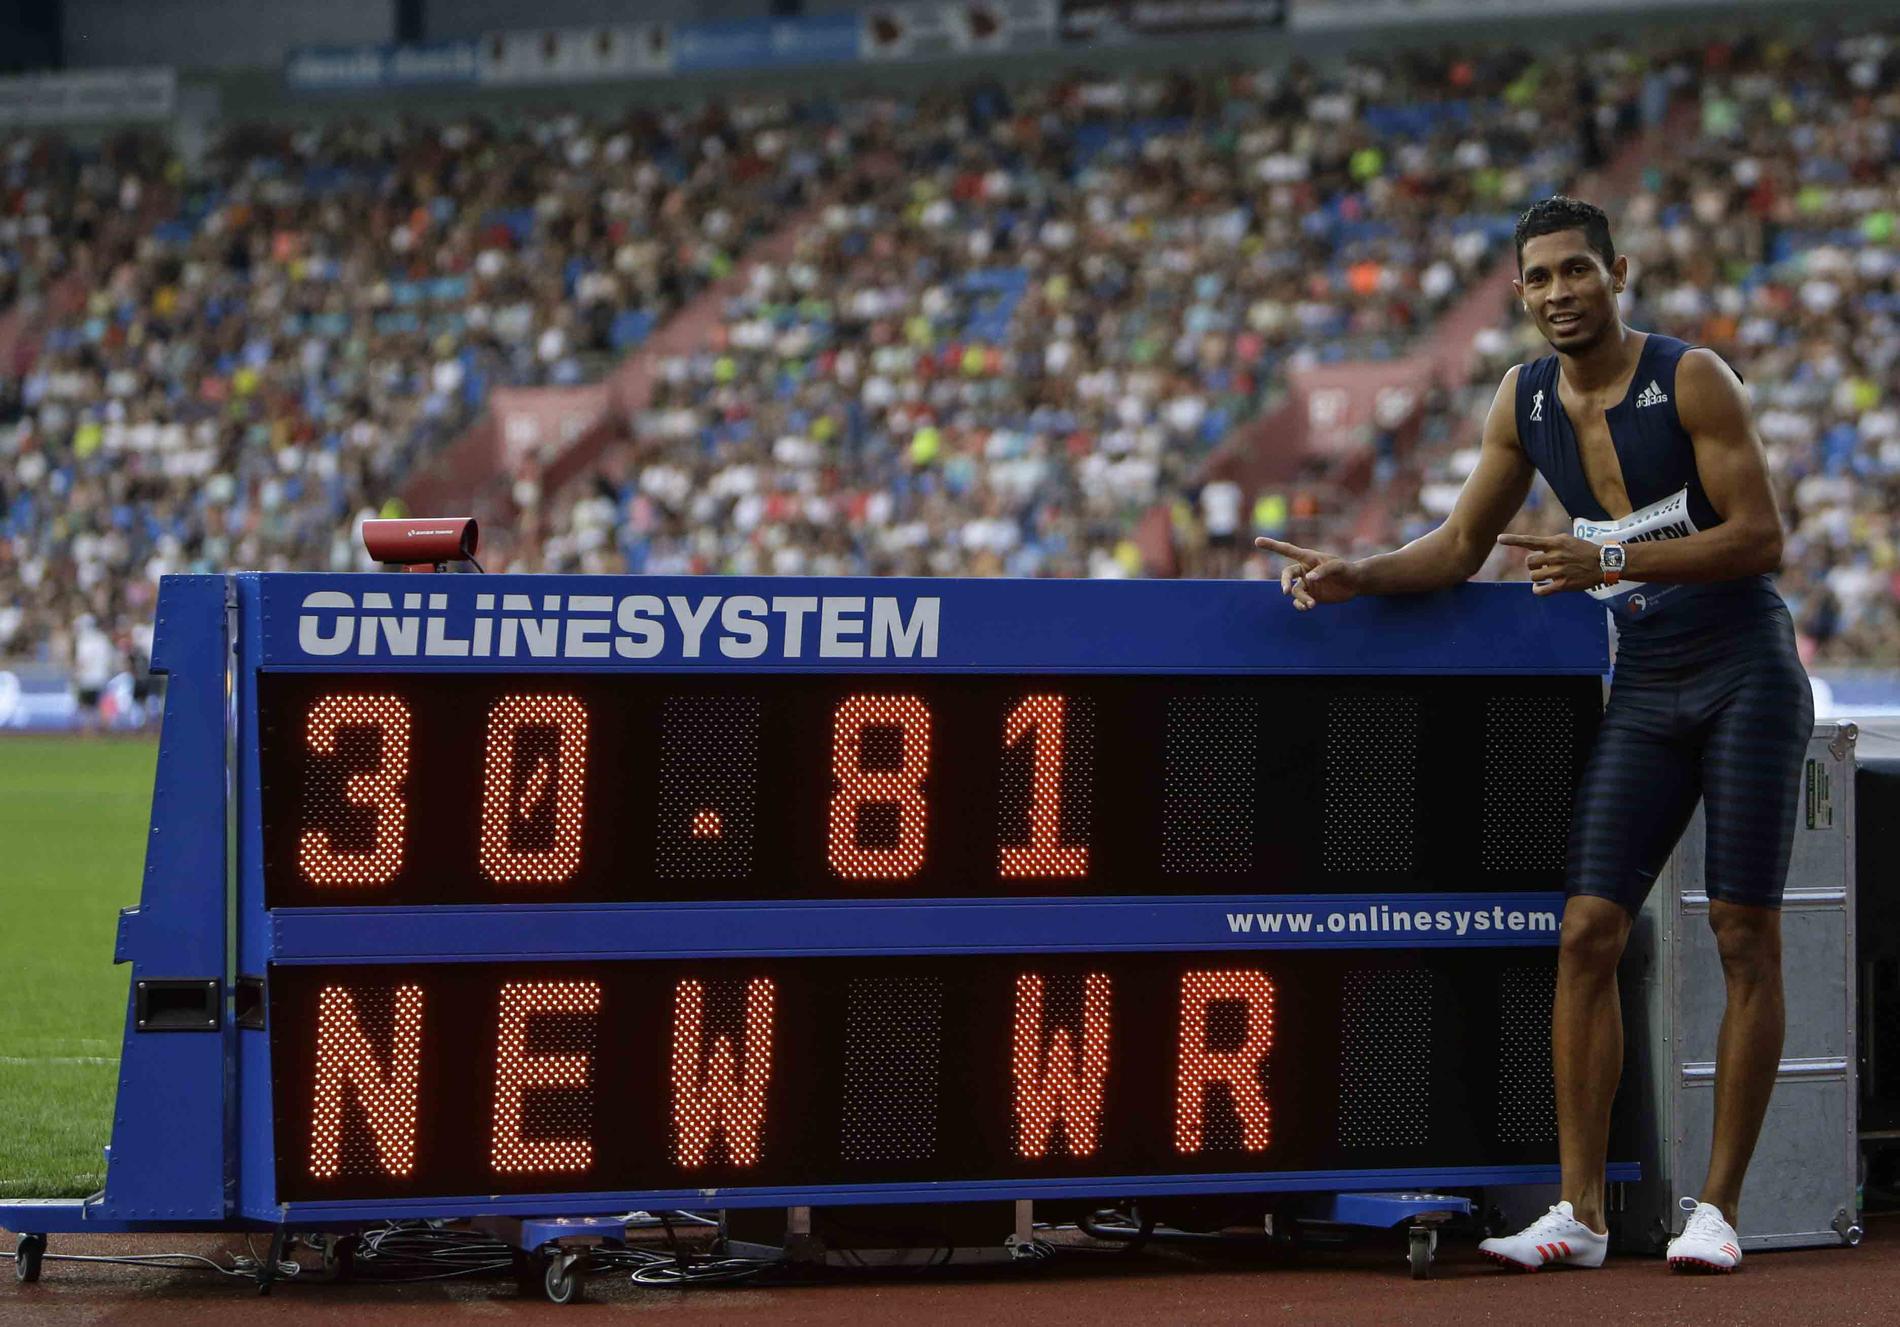 Wayde van Niekerk slog världsrekord på 300 meter.